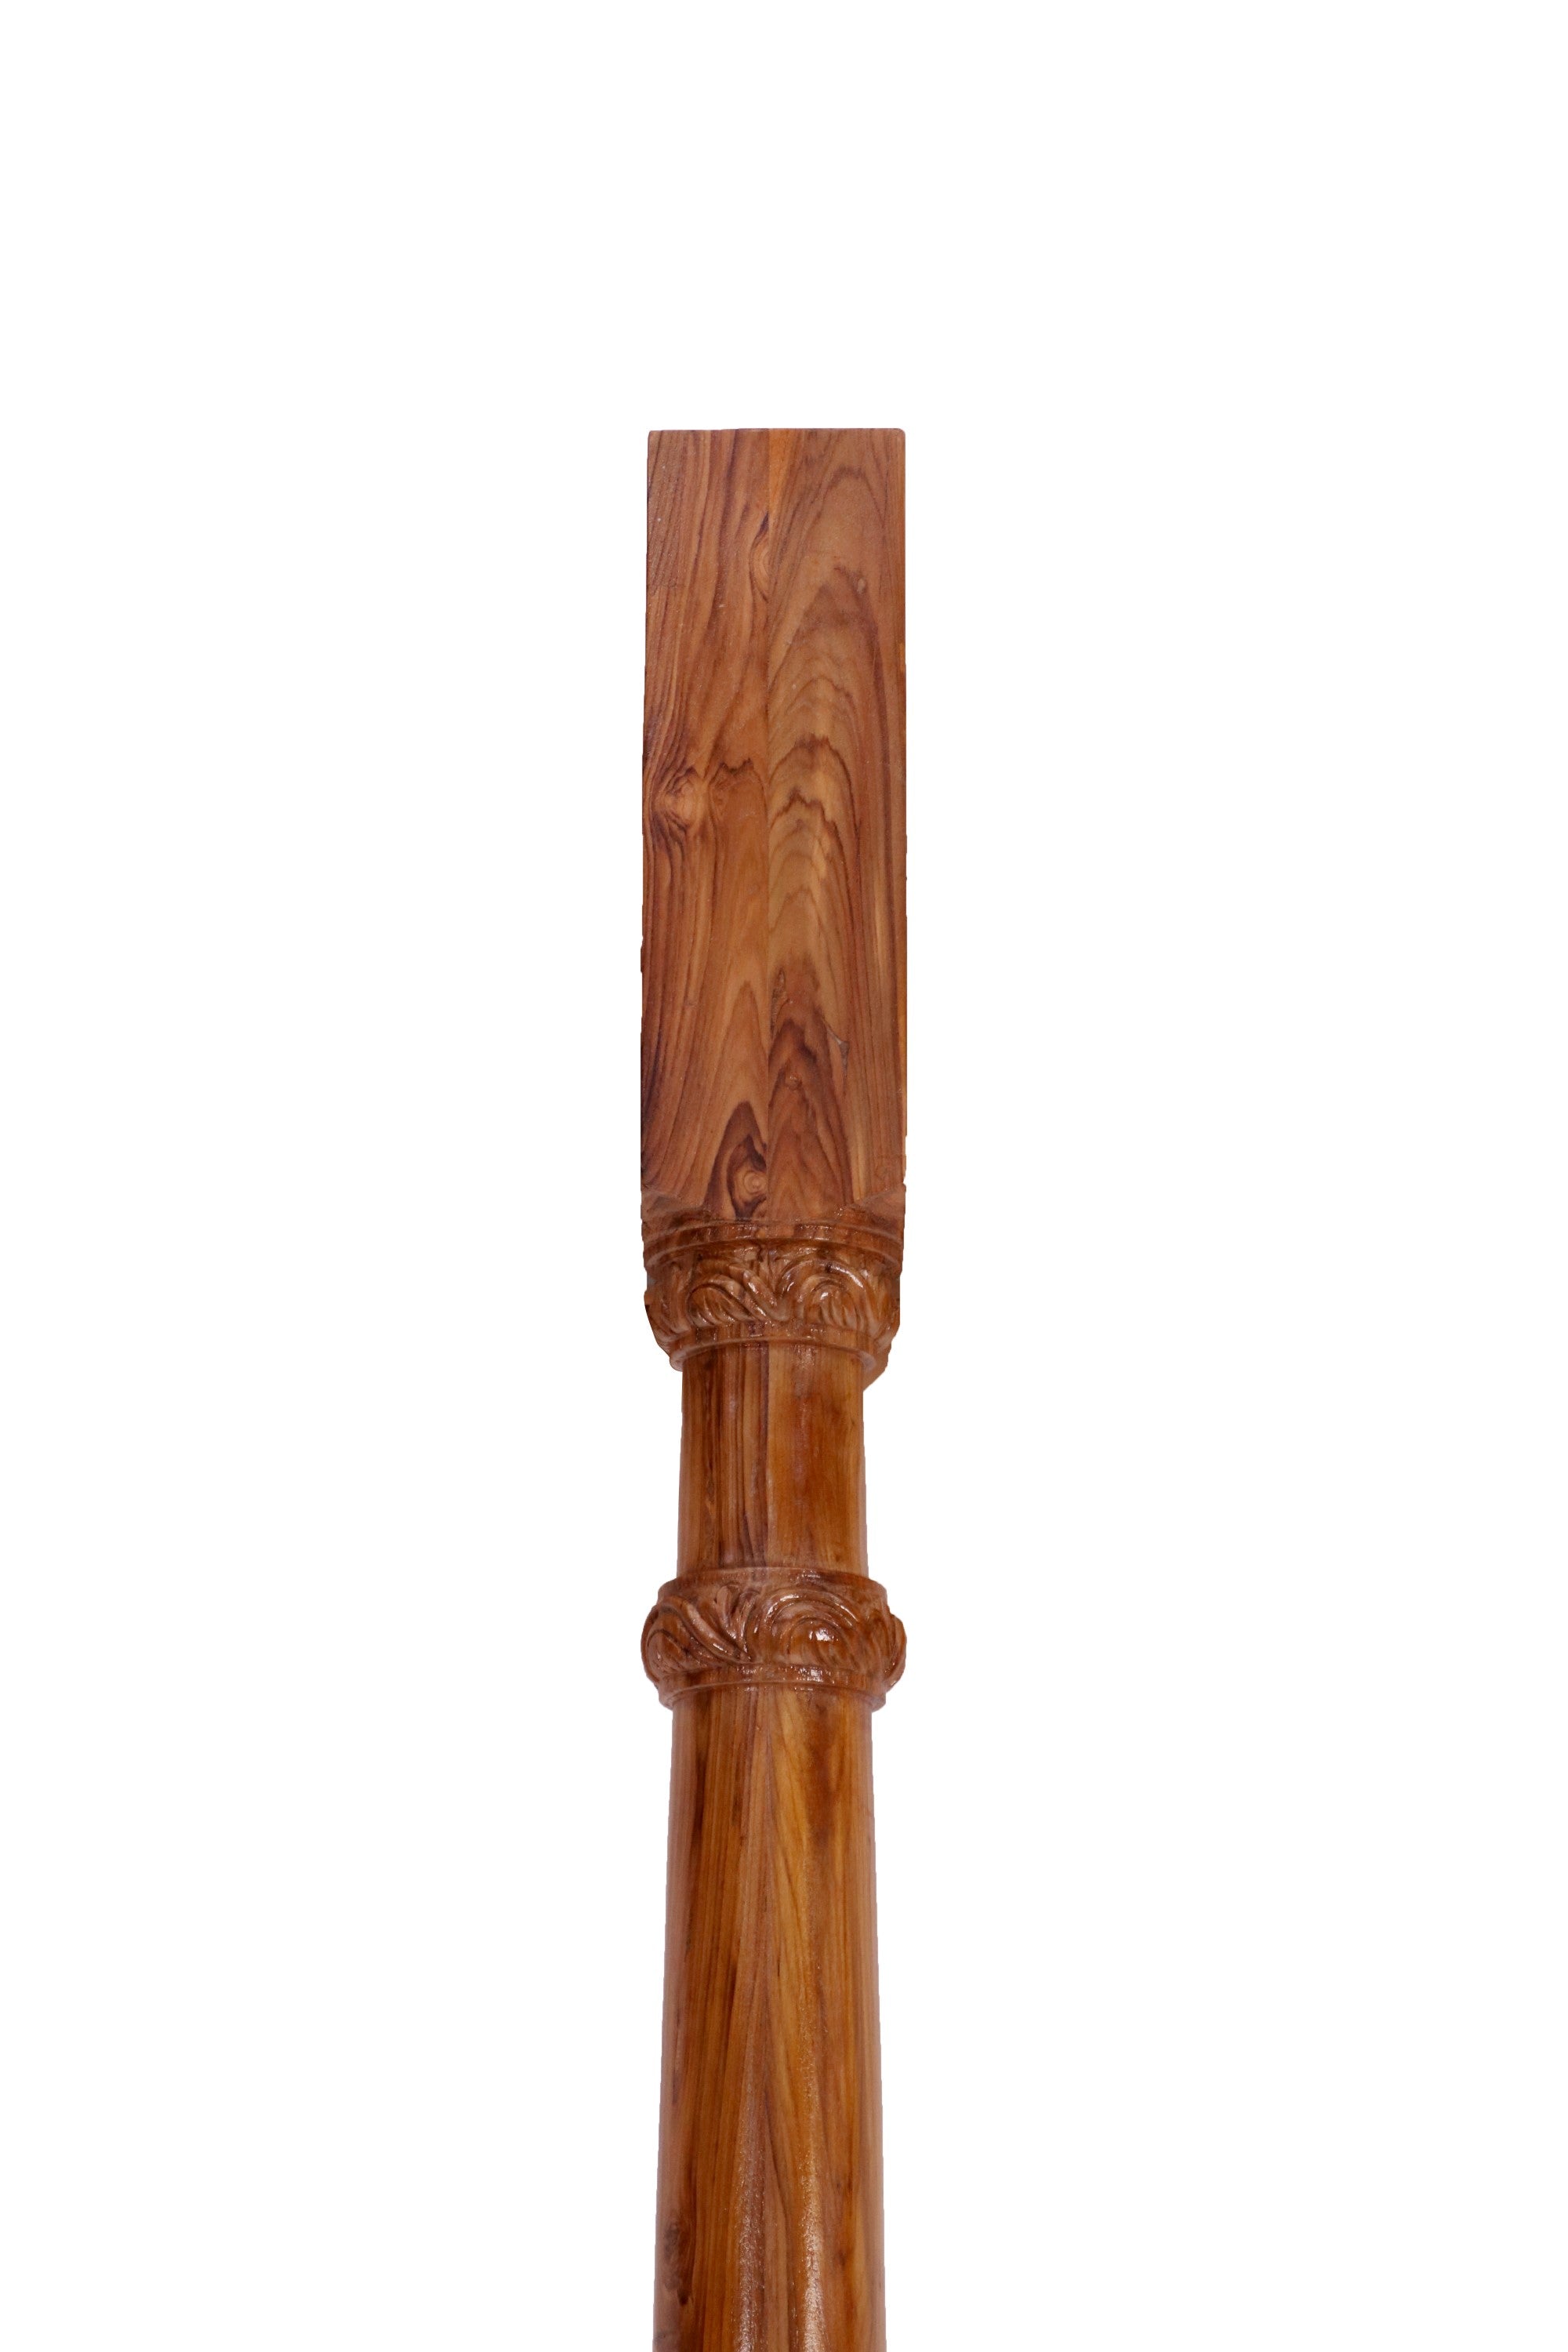 Classical Teak wood Pillar Pillar